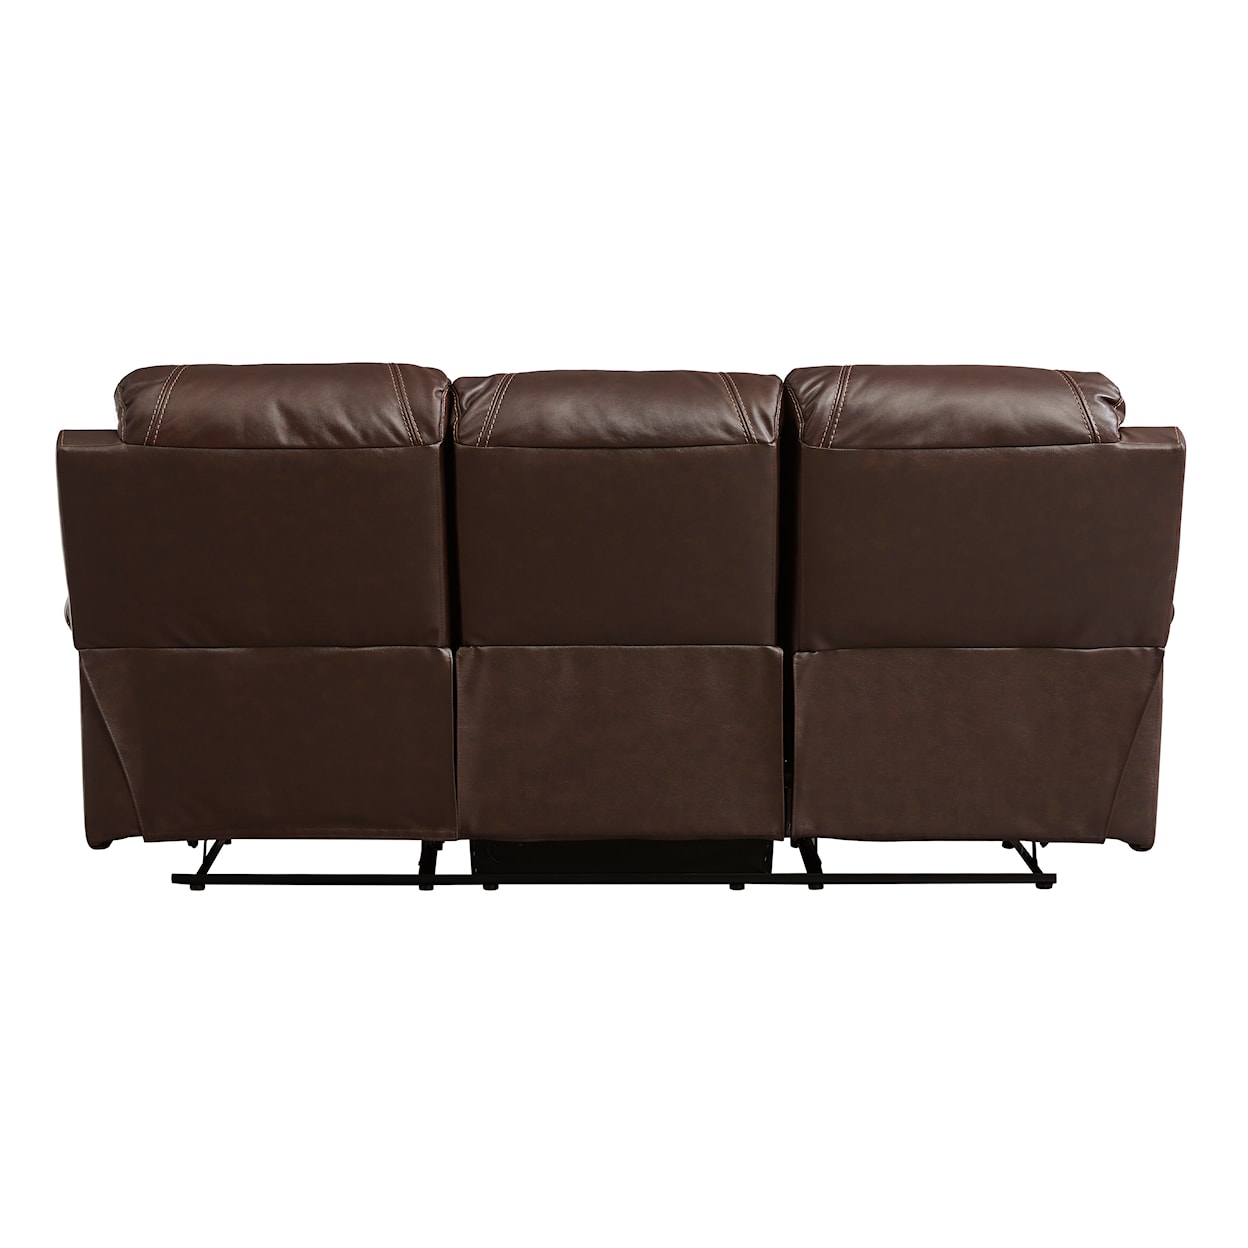 Ashley Furniture Signature Design Grixdale Reclining Sofa